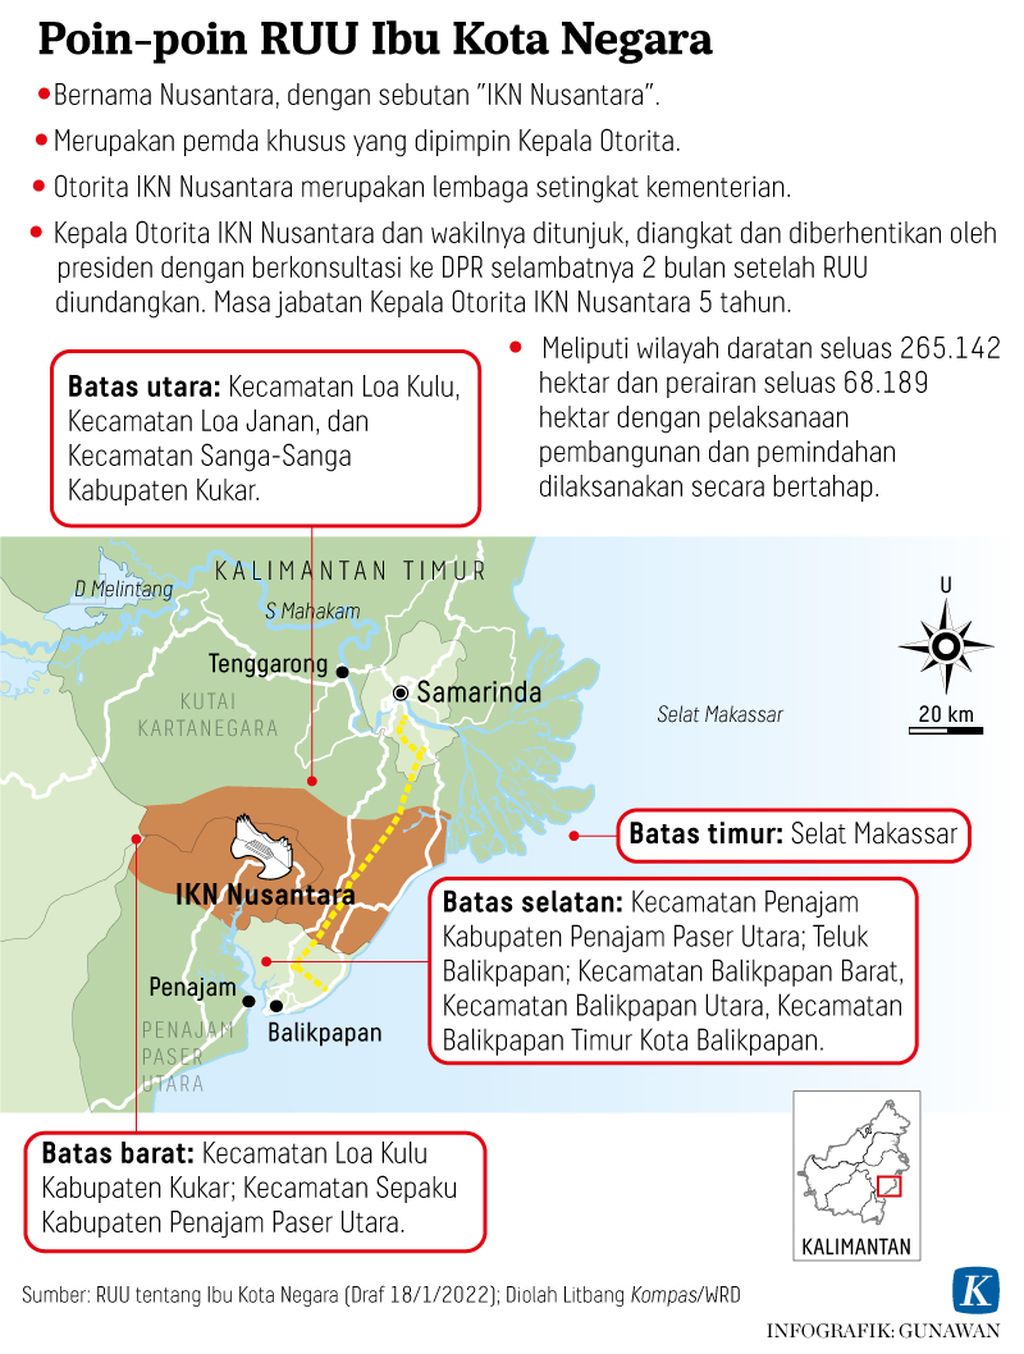 Poin-poin Rencana undang-Undang Ibu Kota Negara Nusantara